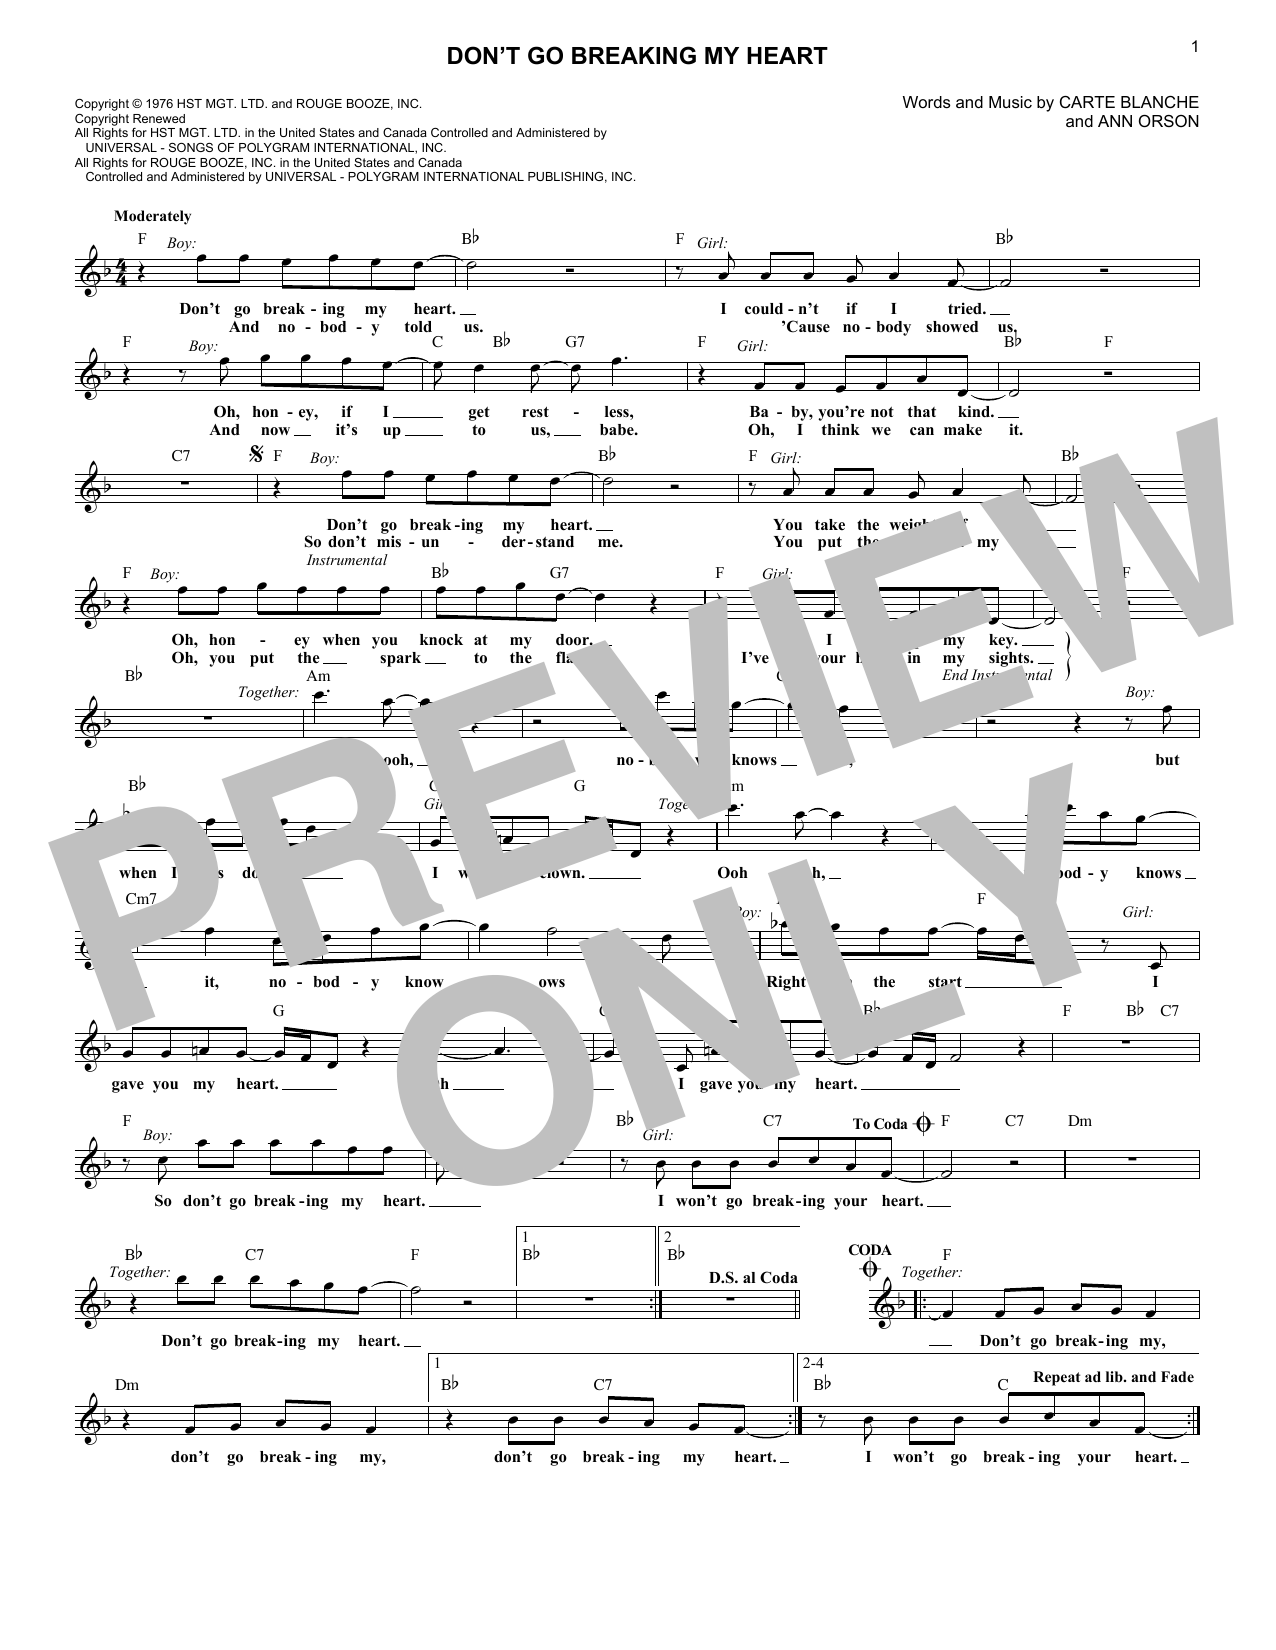 Elton John & Kiki Dee Don't Go Breaking My Heart Sheet Music Notes & Chords for Melody Line, Lyrics & Chords - Download or Print PDF